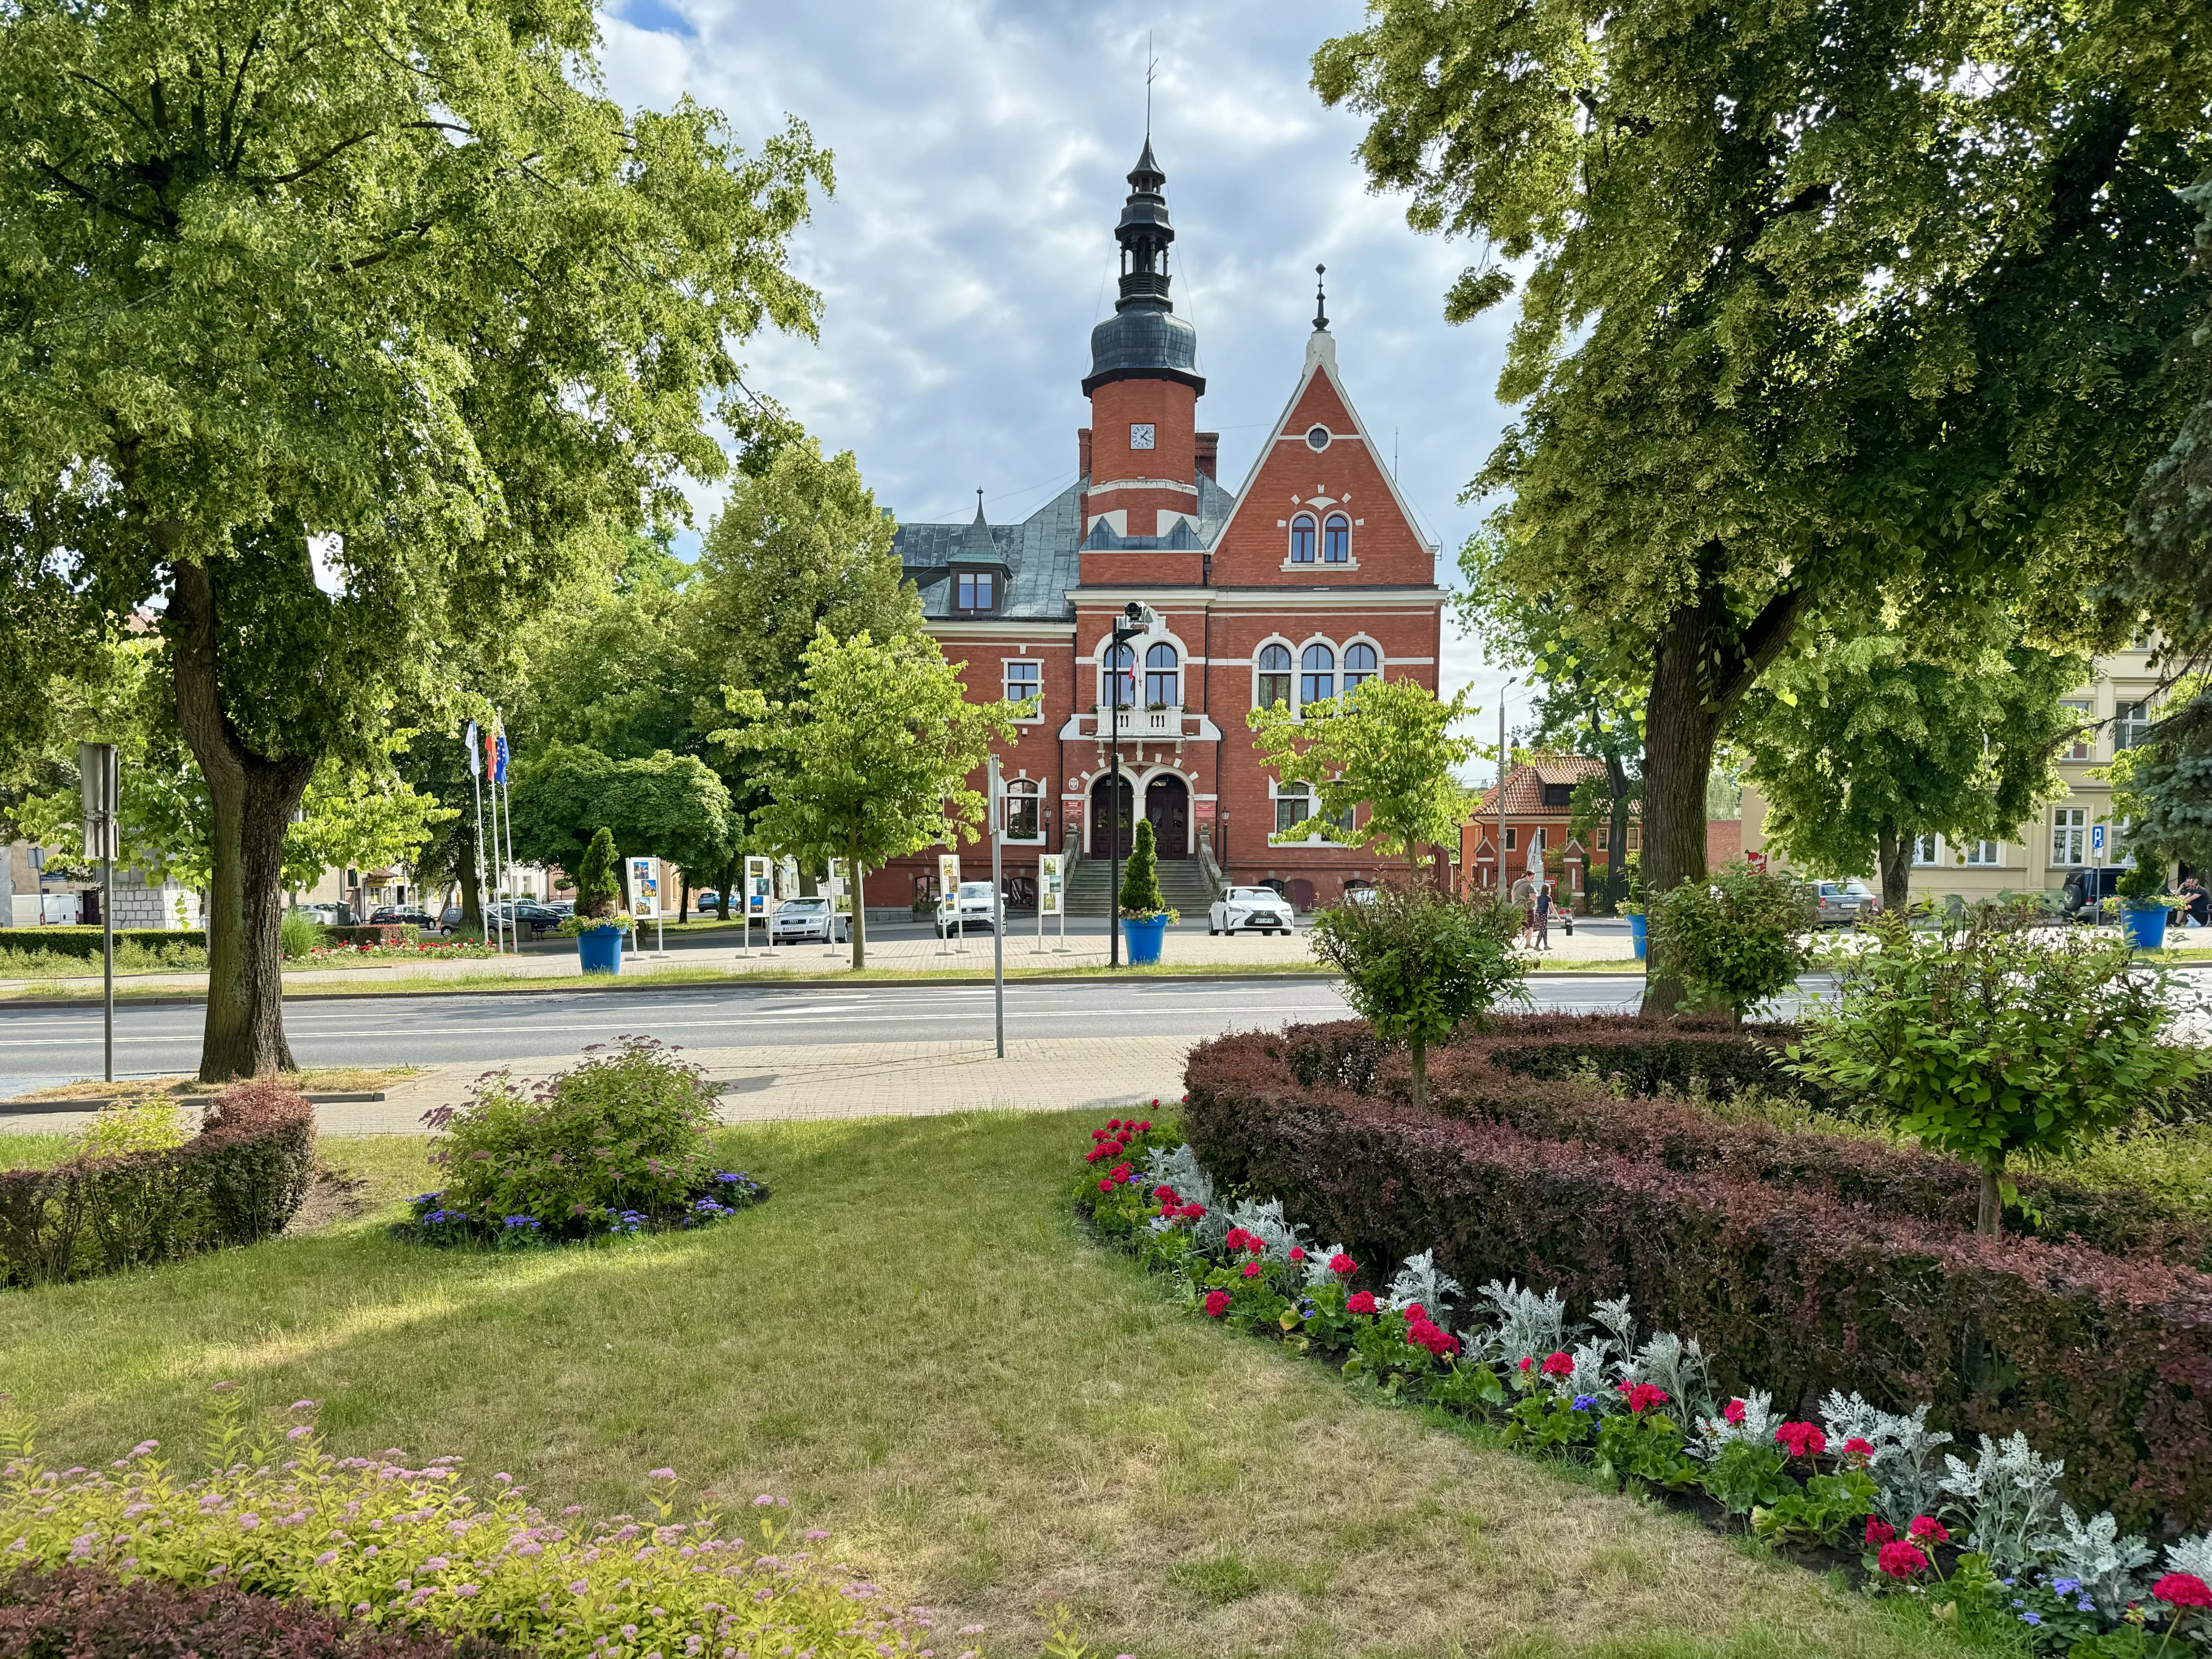 Kętrzyn(Rastenburg), Poland